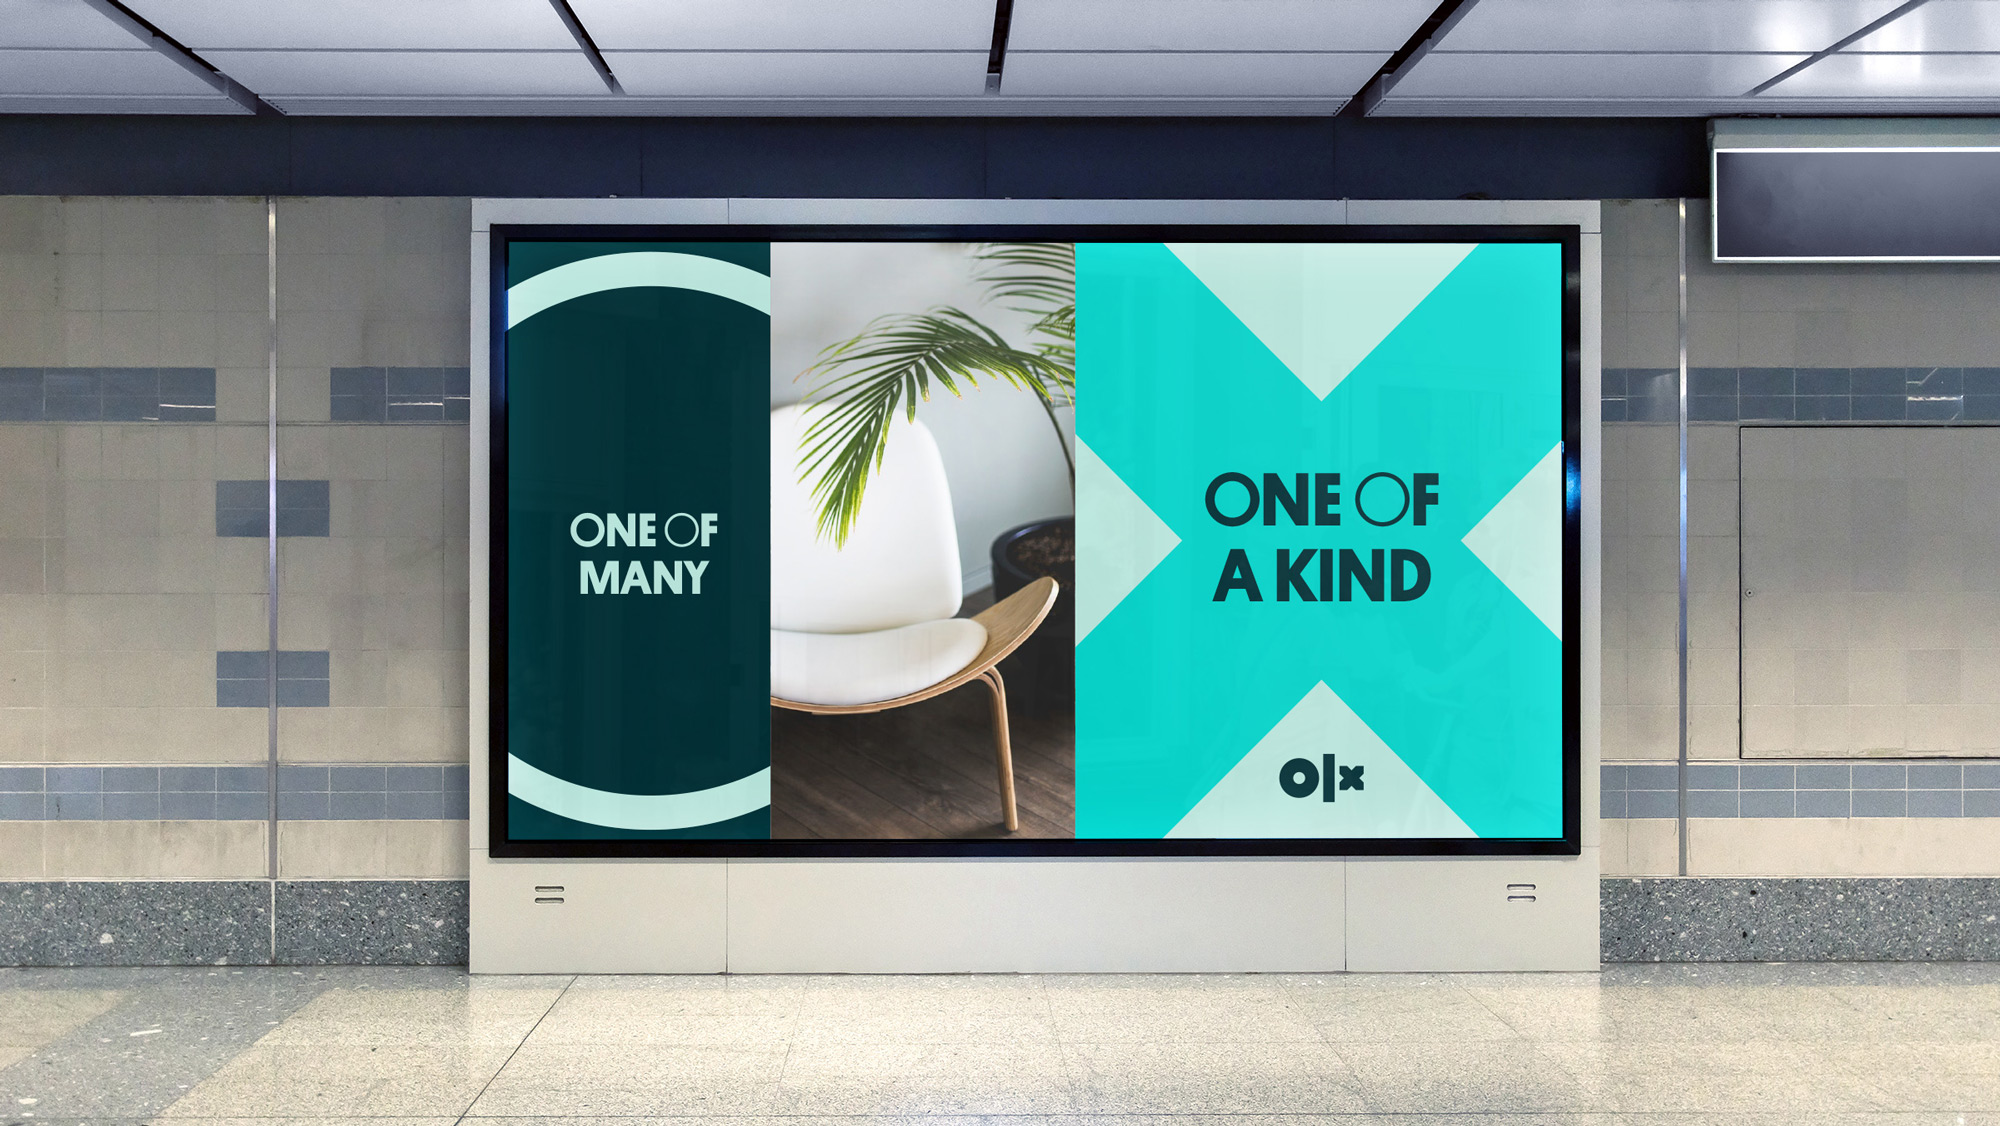 Nova identidade visual da OLX - Sala7design